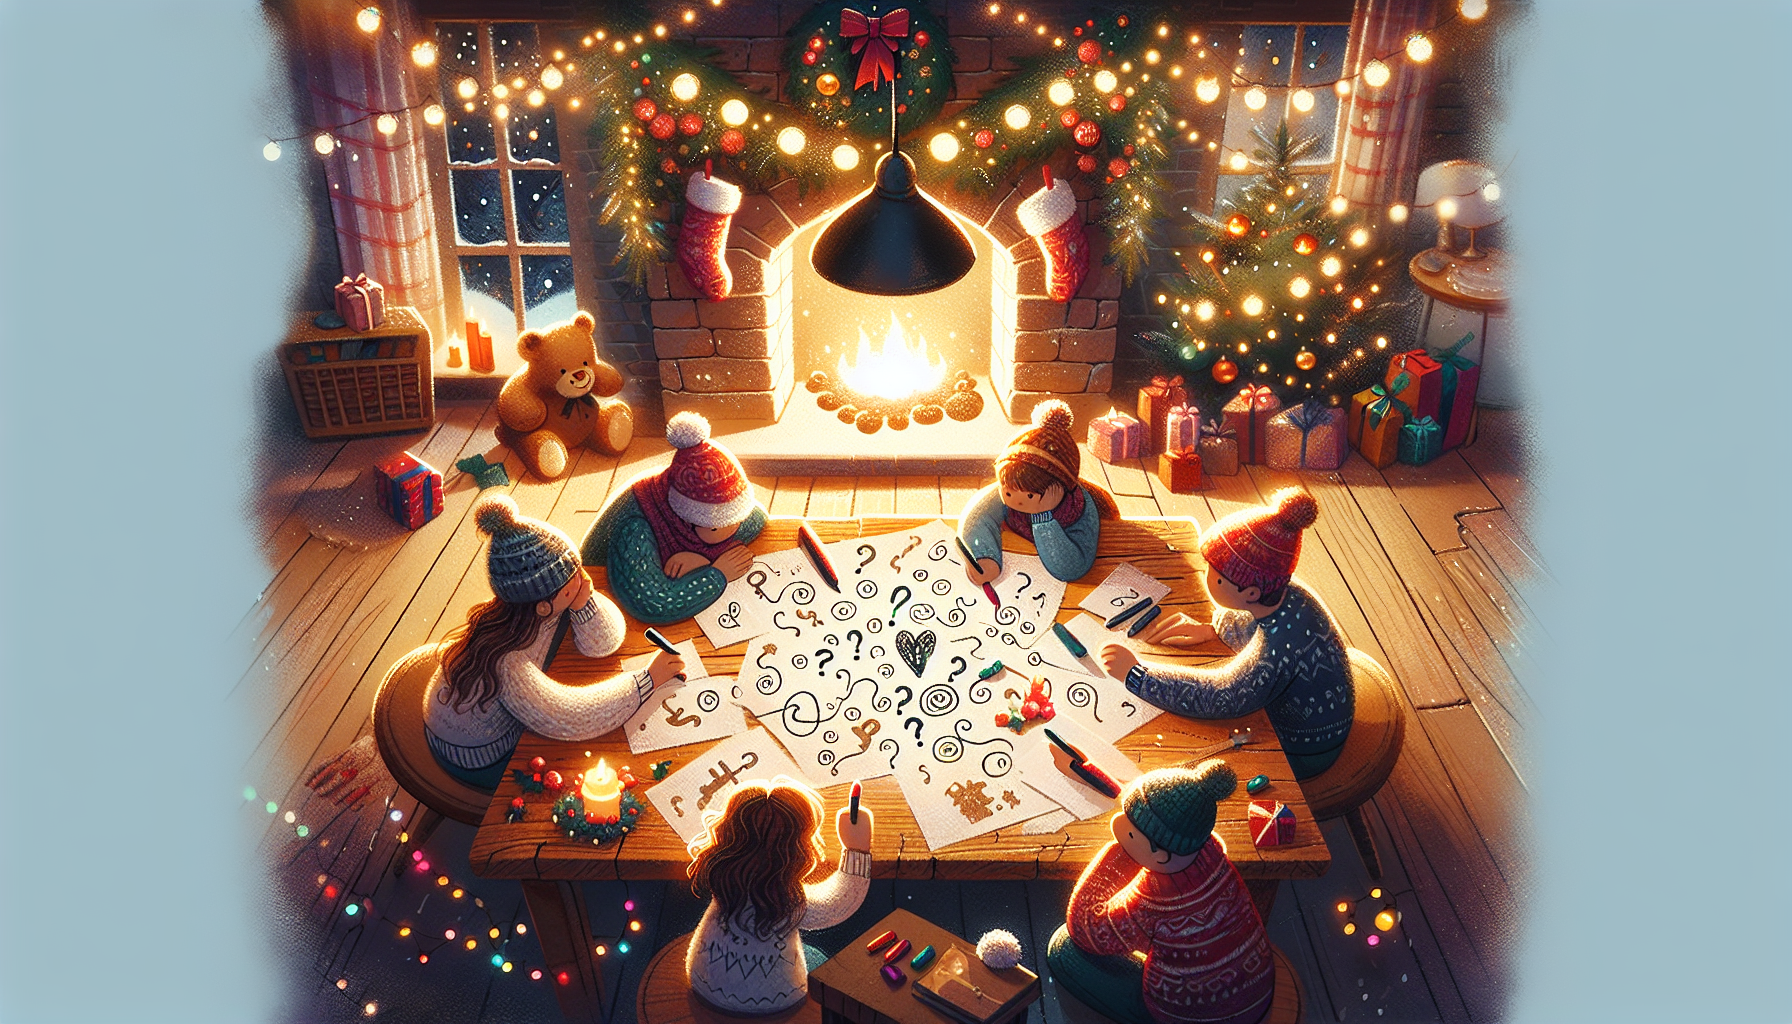 Family creating Christmas scavenger hunt clues